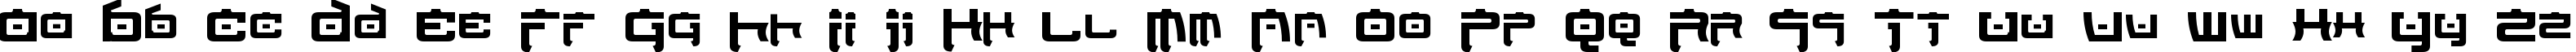 Пример написания английского алфавита шрифтом Nippon Tech Bold